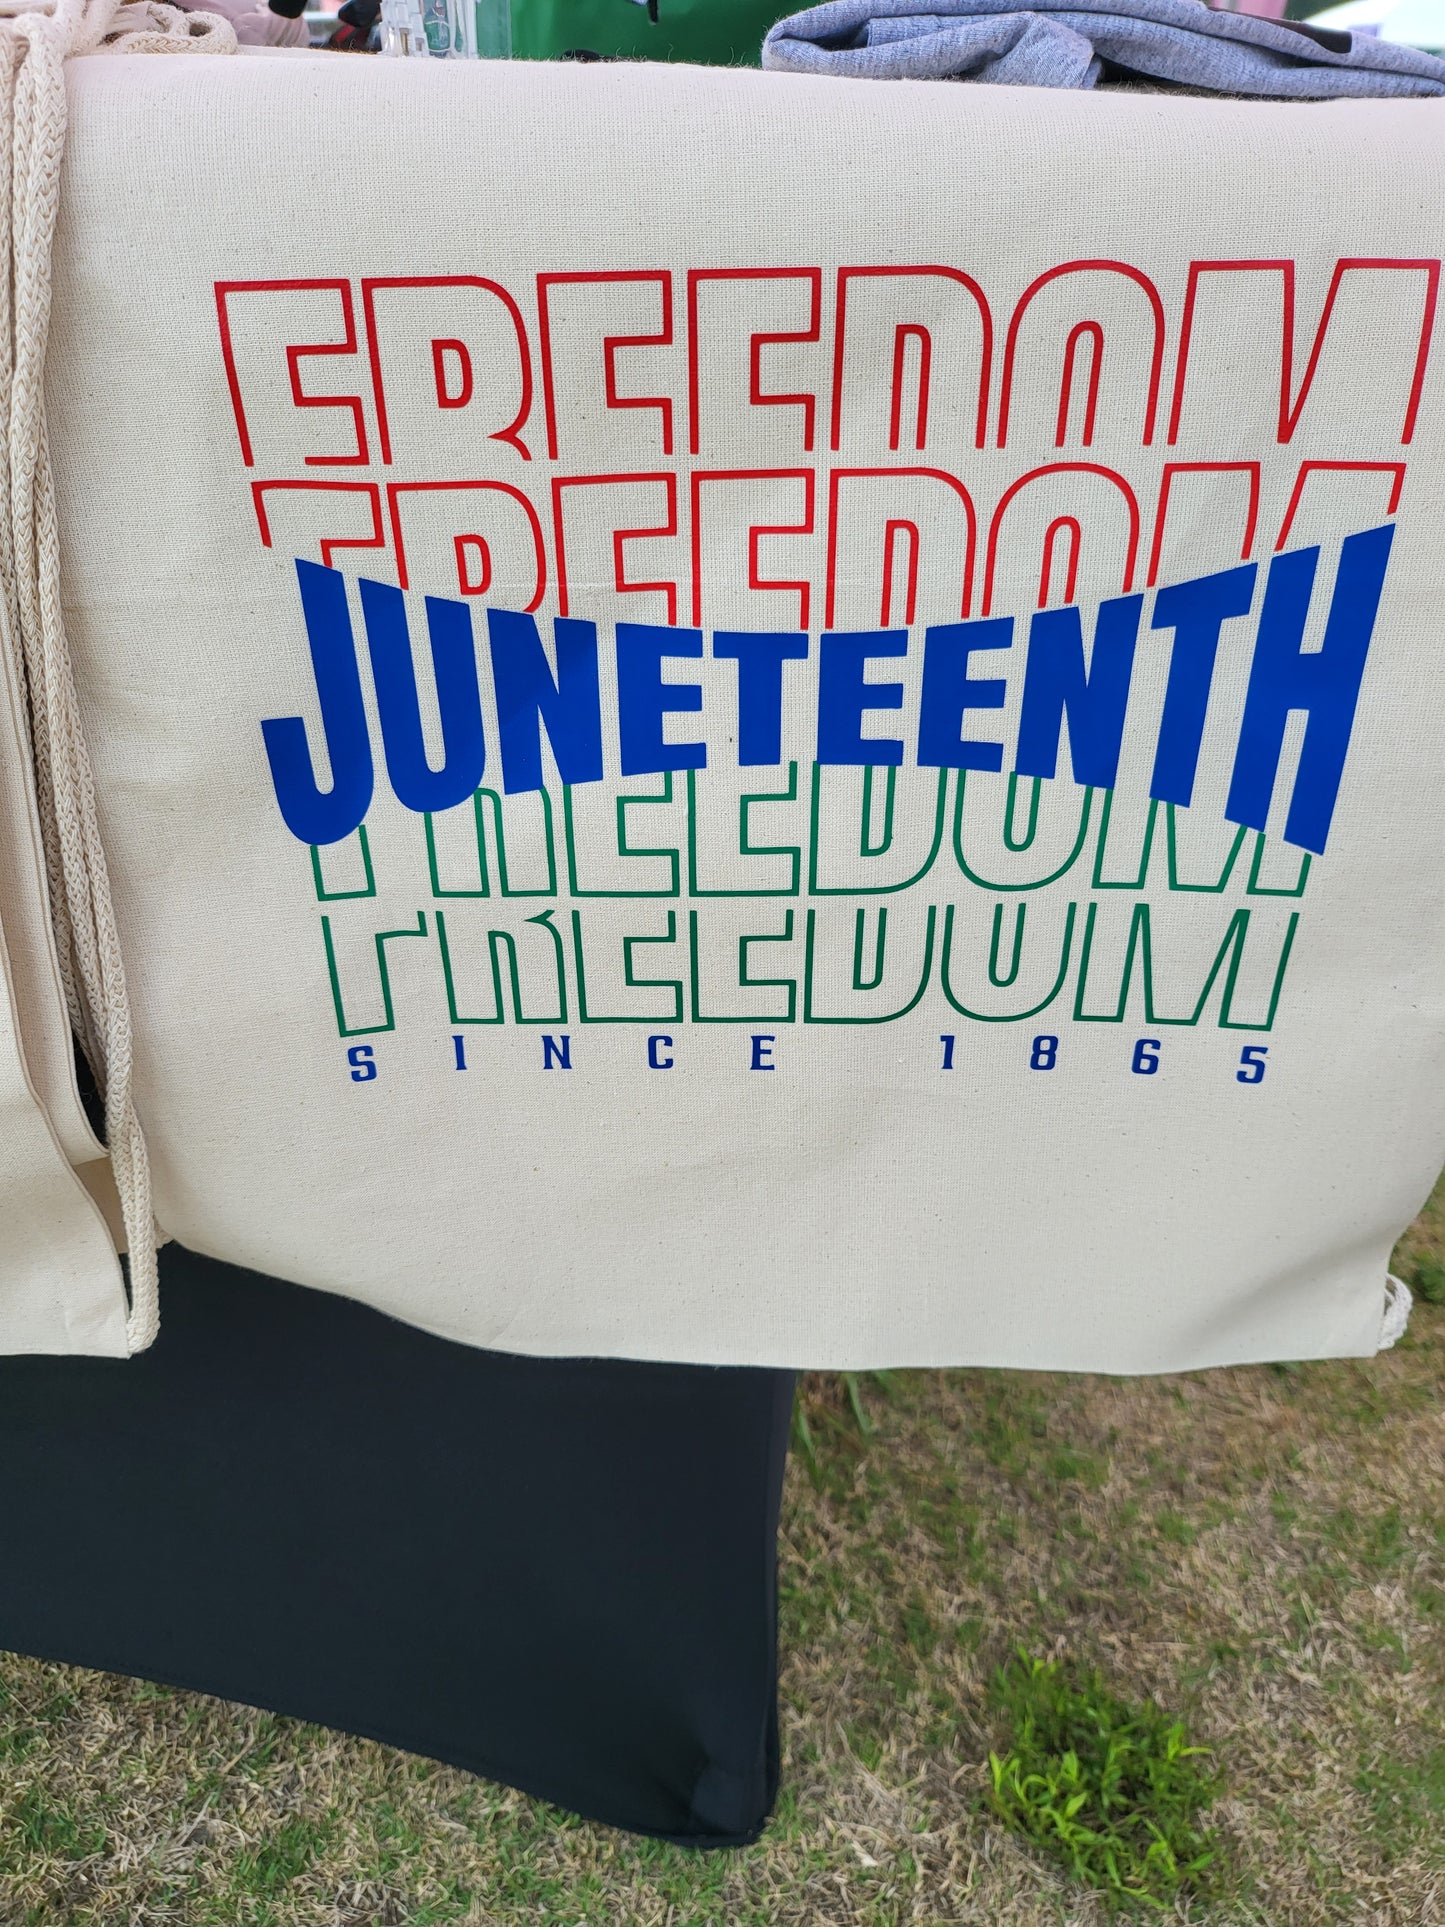 Juneteenth Freedom since 1865